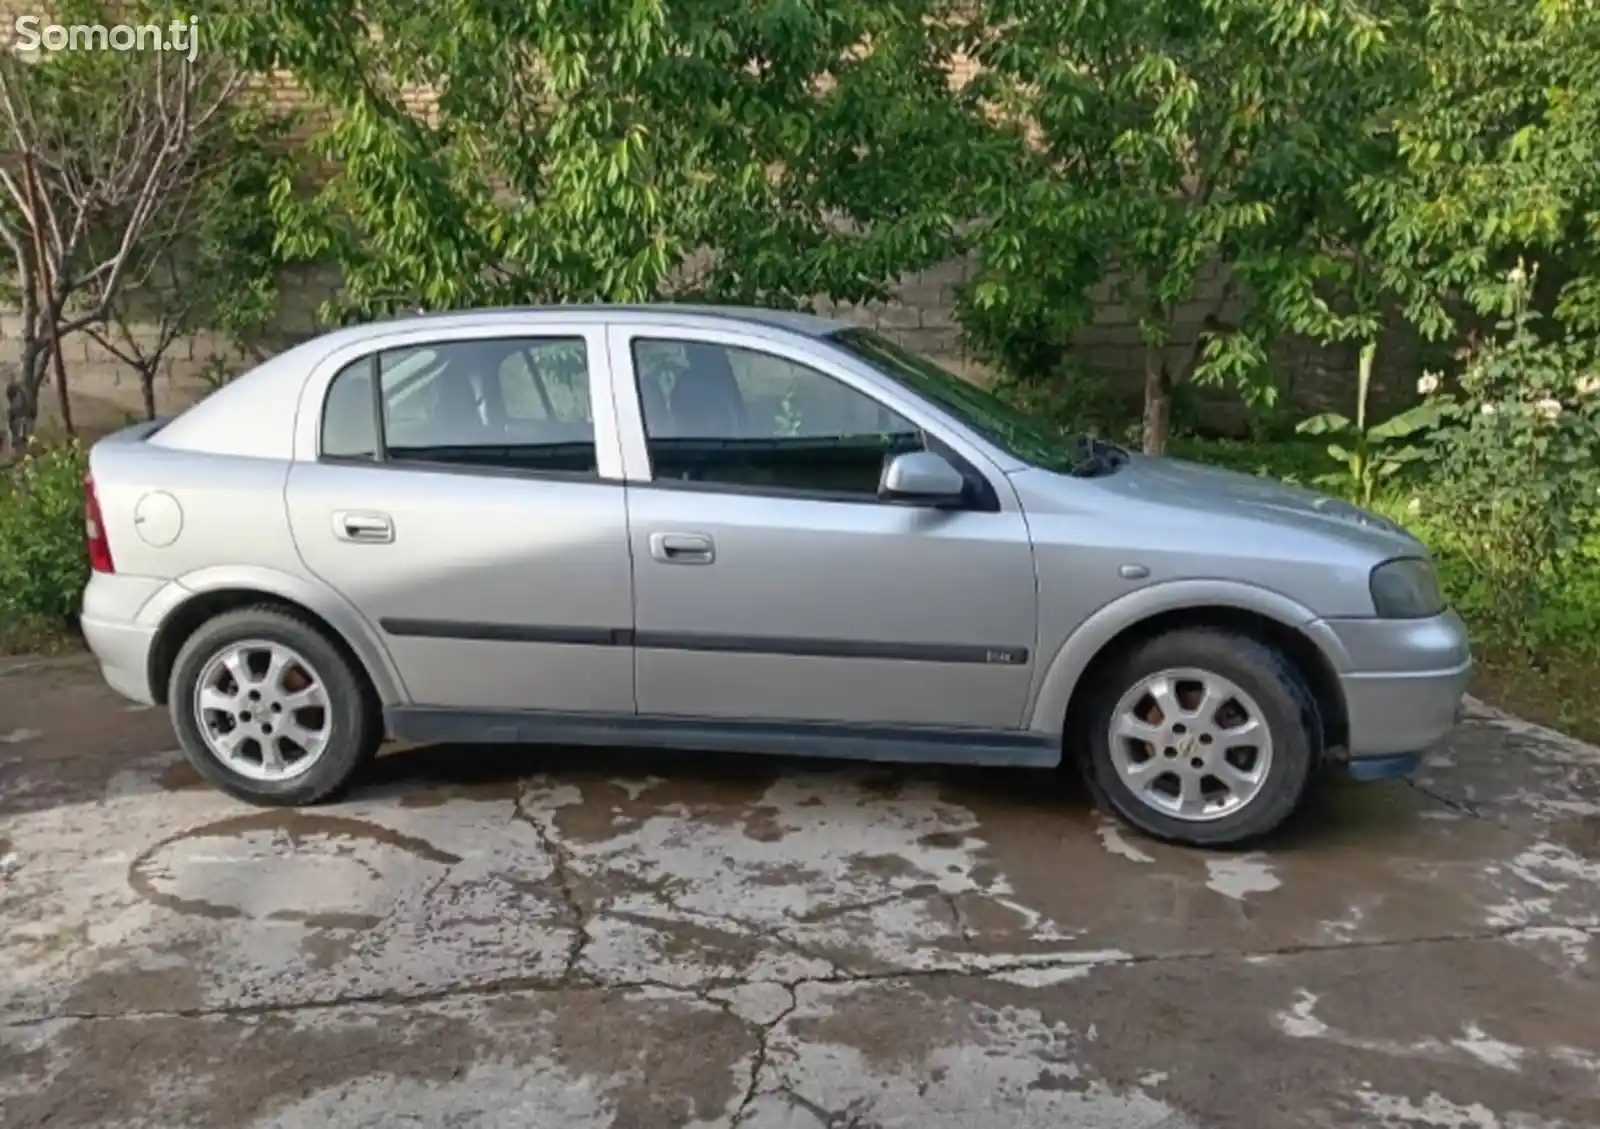 Opel Astra G, 2003-2